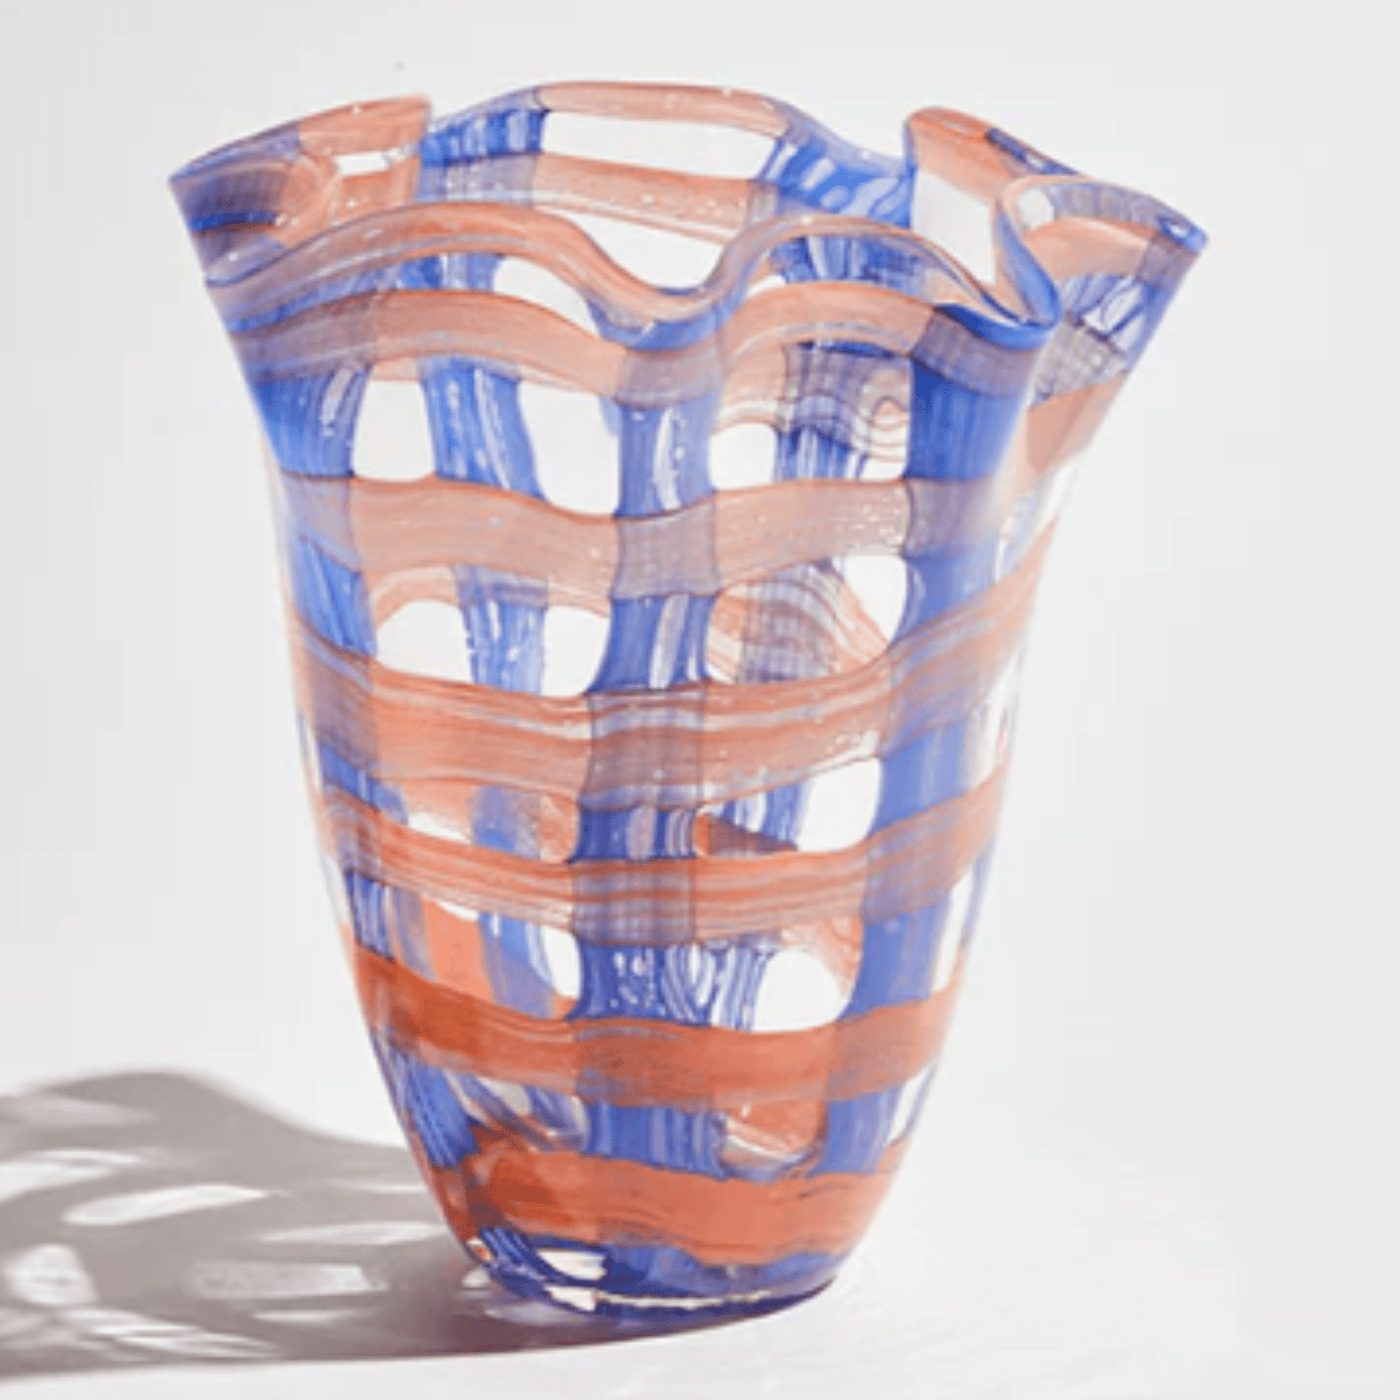 Ben David Vivid Clear Vase in Cobalt/Melon